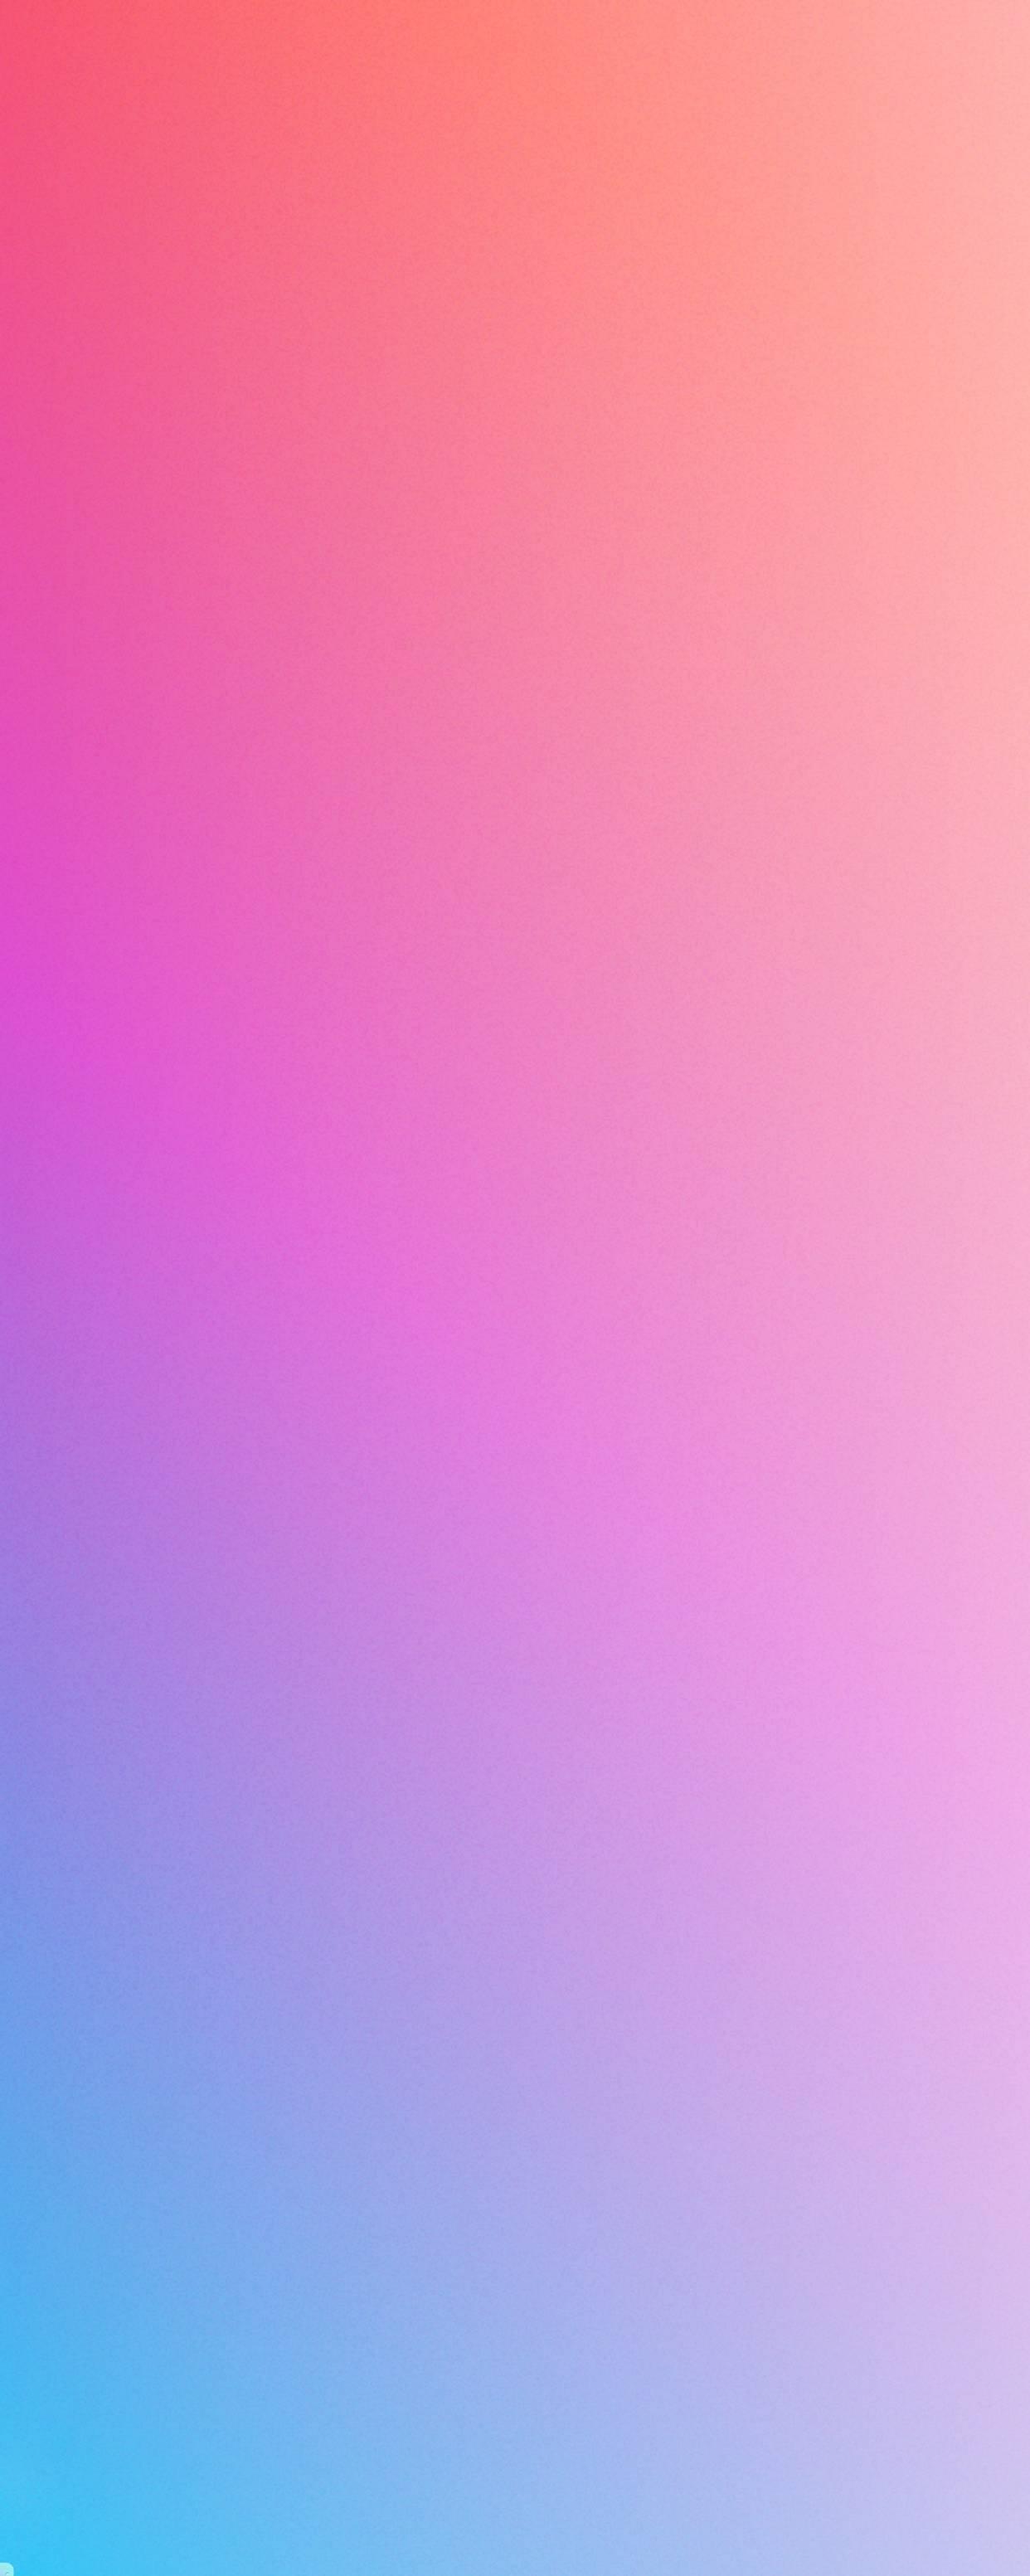 Pink Gradient iPhone Wallpapers Top Free Pink Gradient